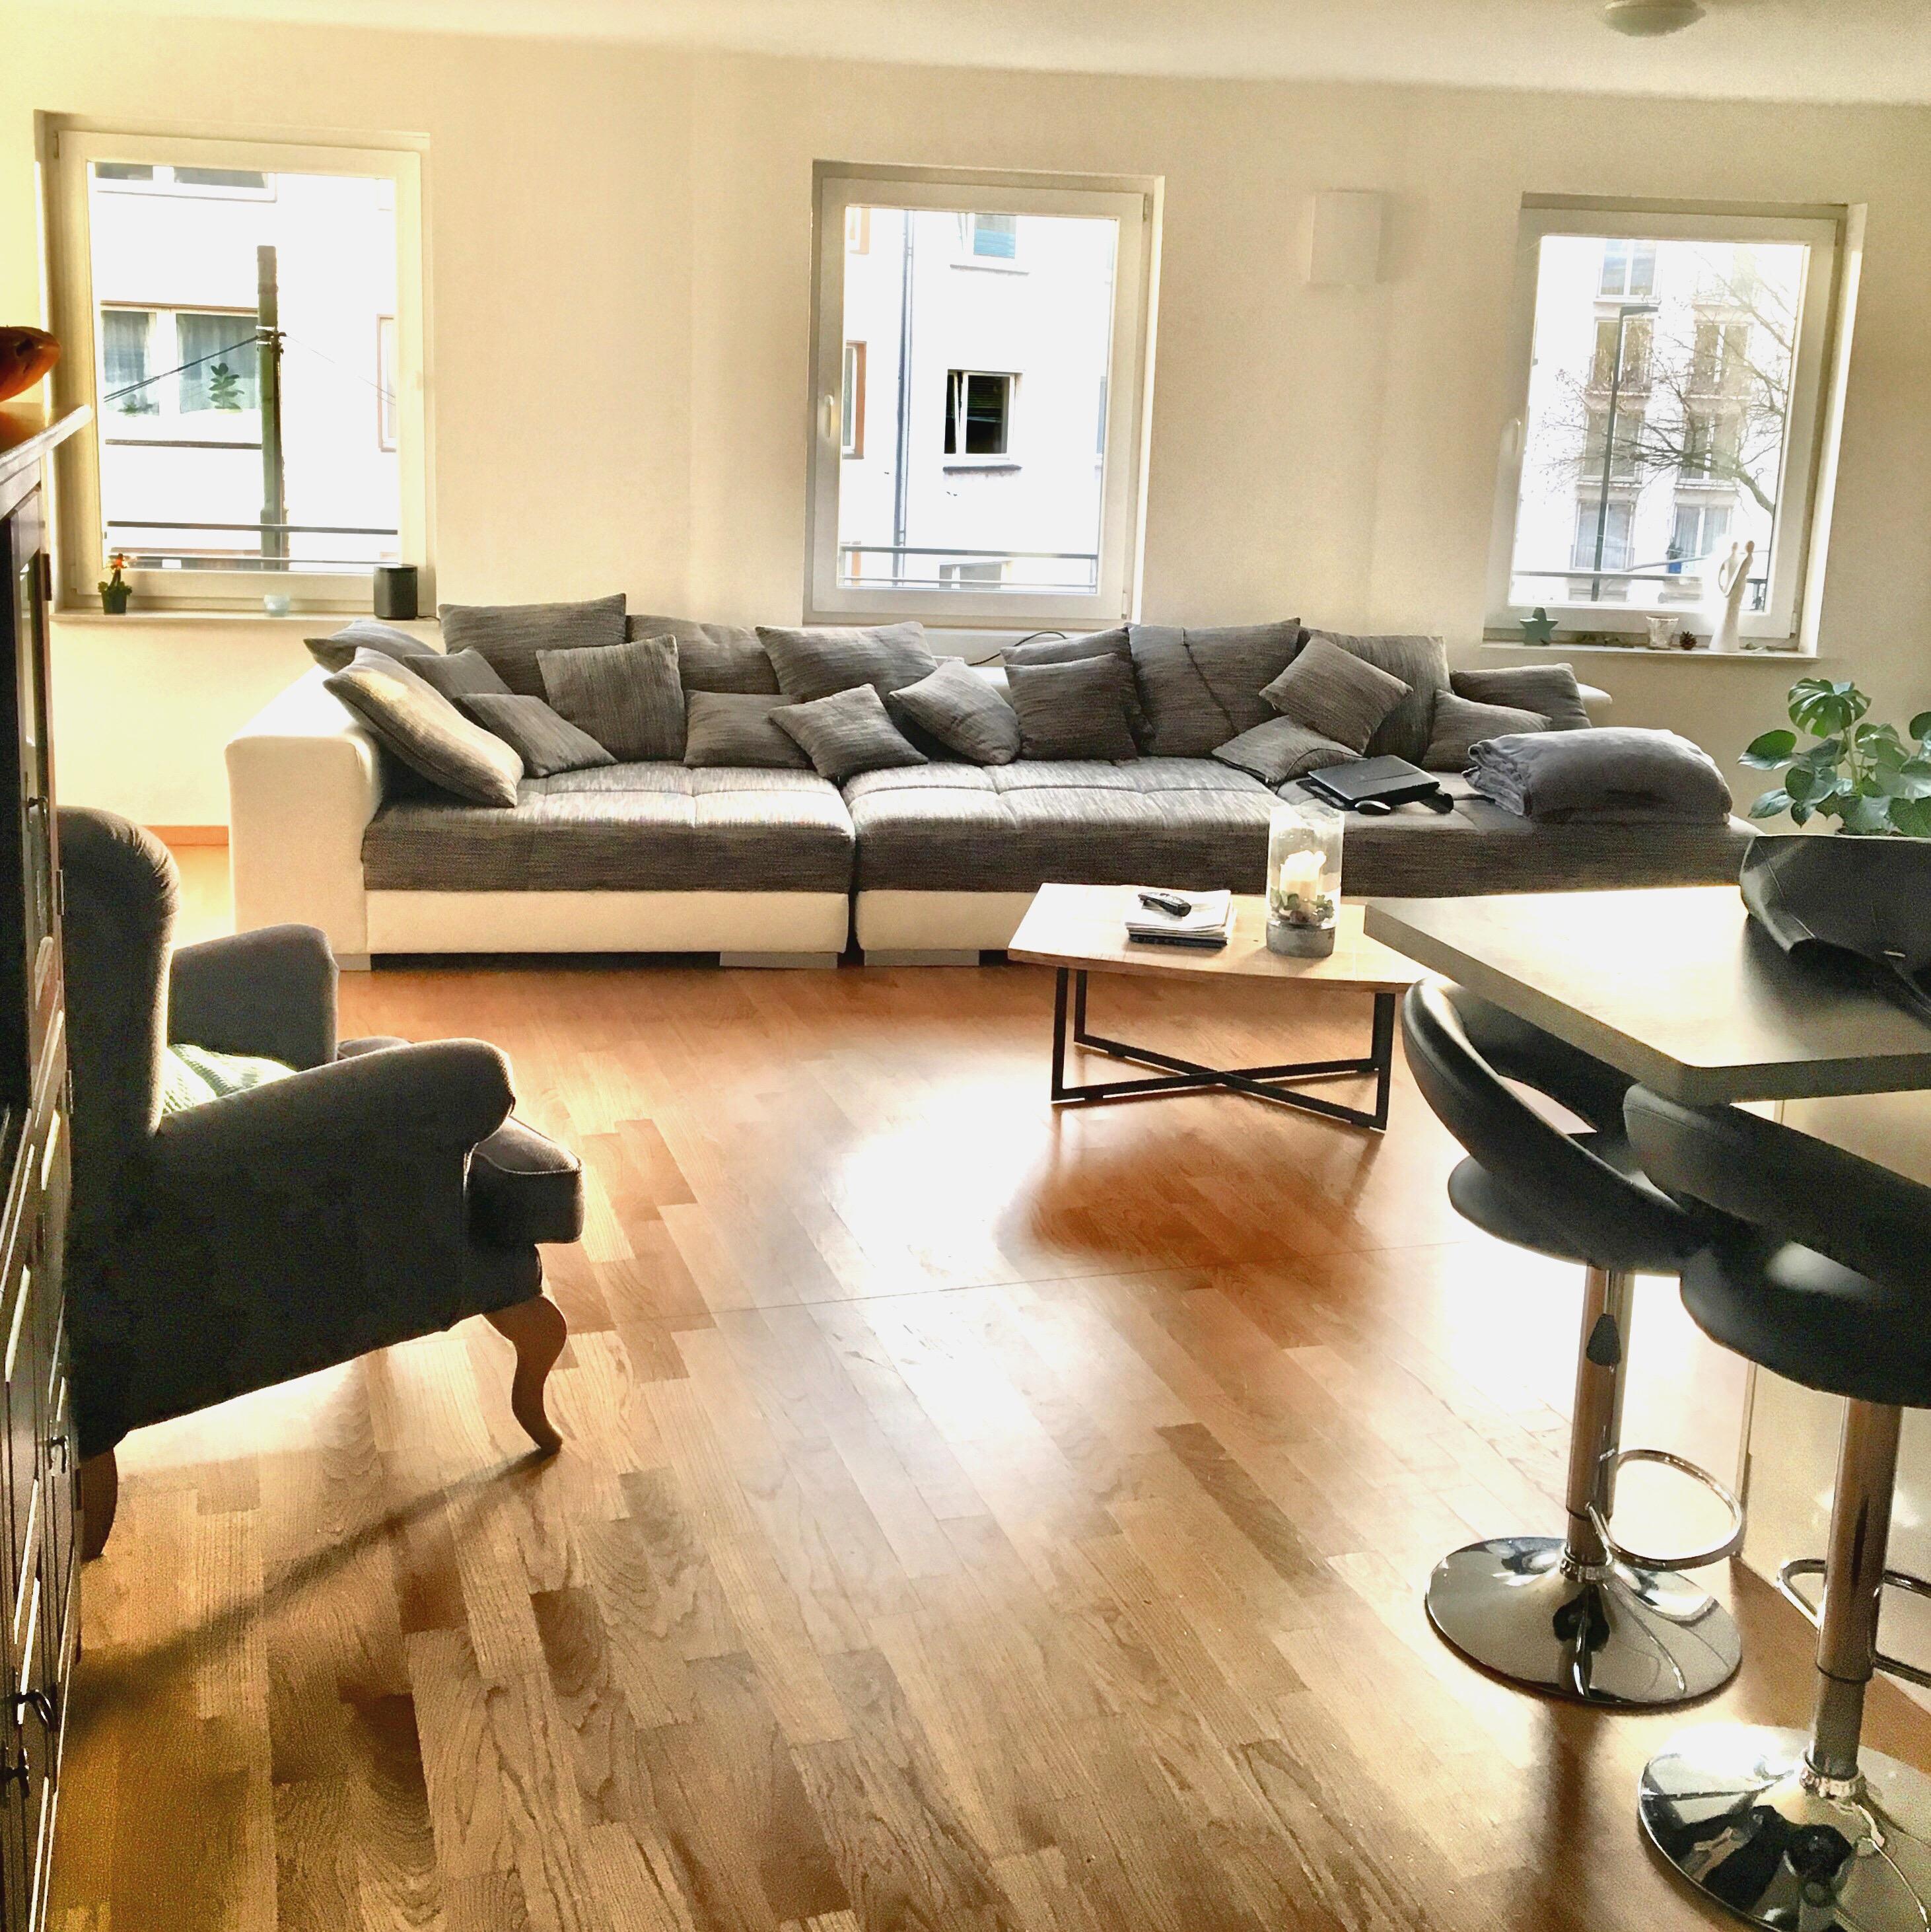 #wohnzimmer #couchliebt #livingroom #couch #whiteliving #sofa #parkett #scandilove #nordicliving #holz 